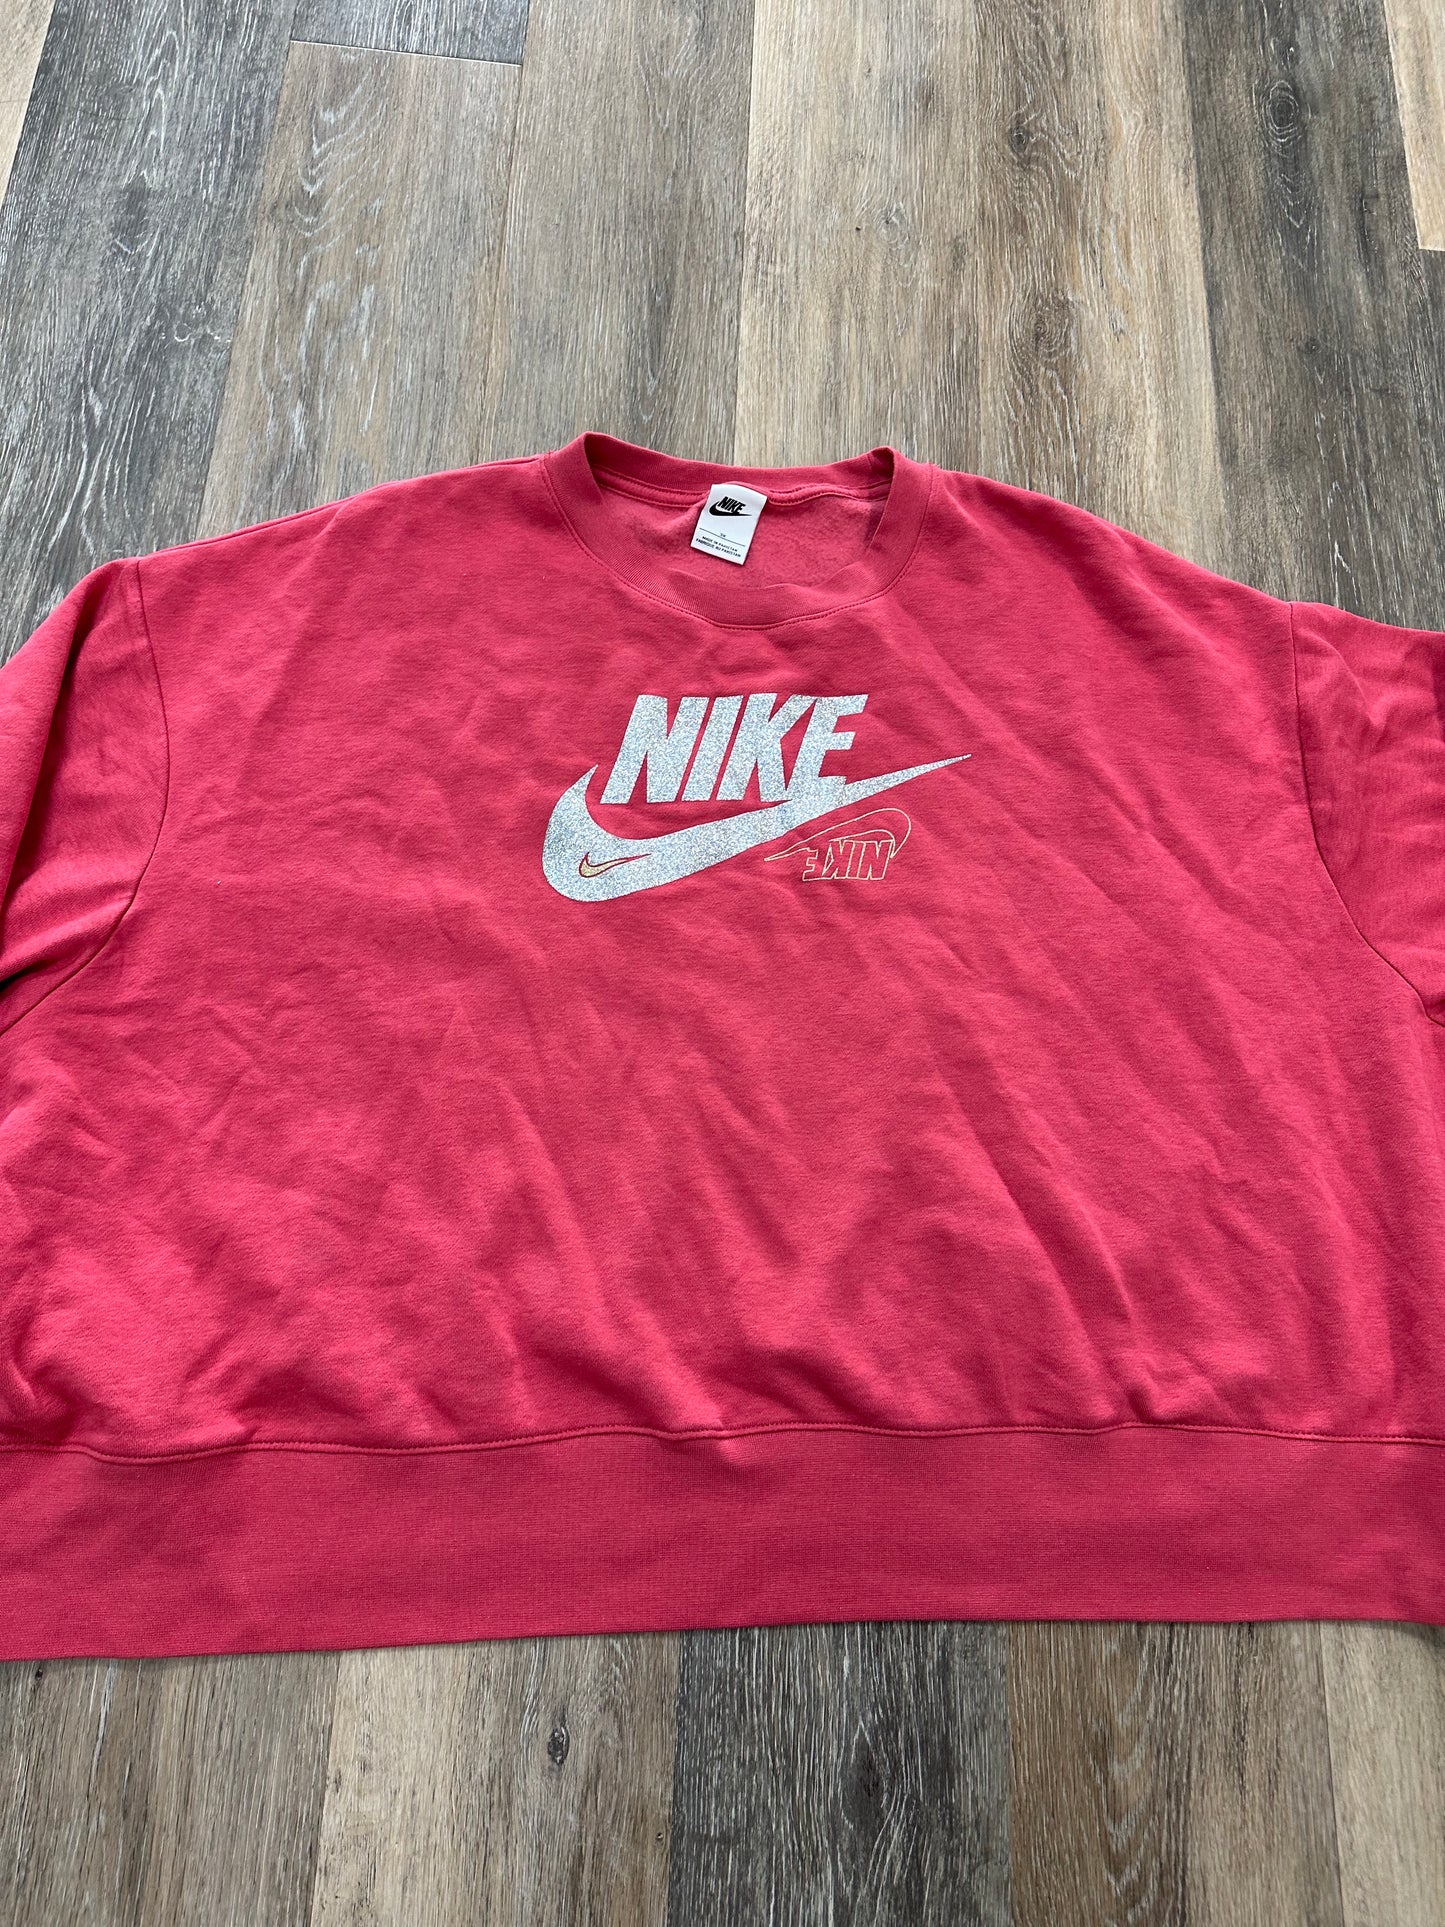 Sweatshirt Crewneck By Nike Apparel  Size: 3x